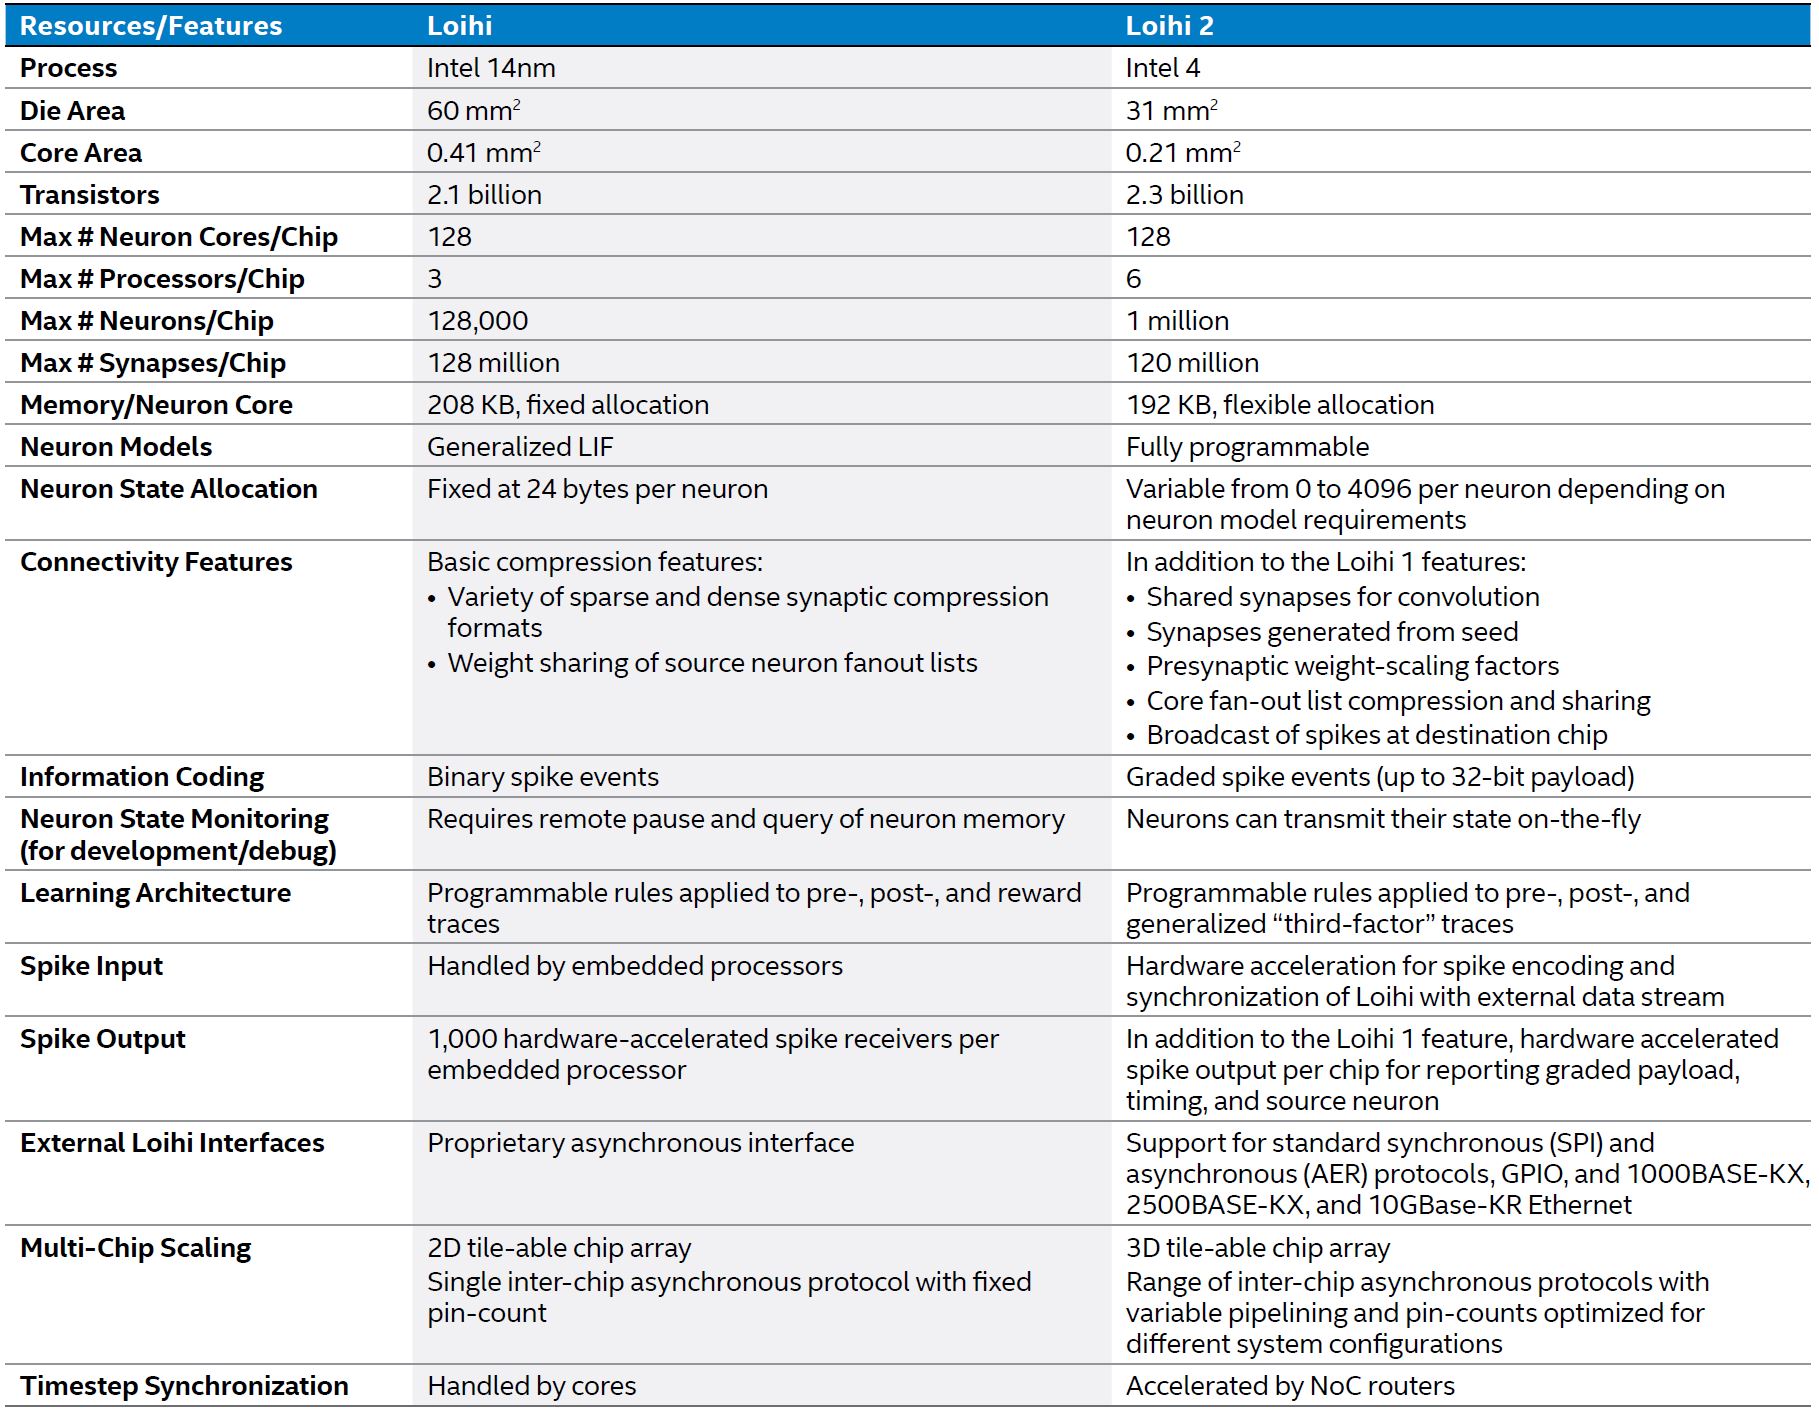 Intel Loihi V Loihi 2 Spec Comparison